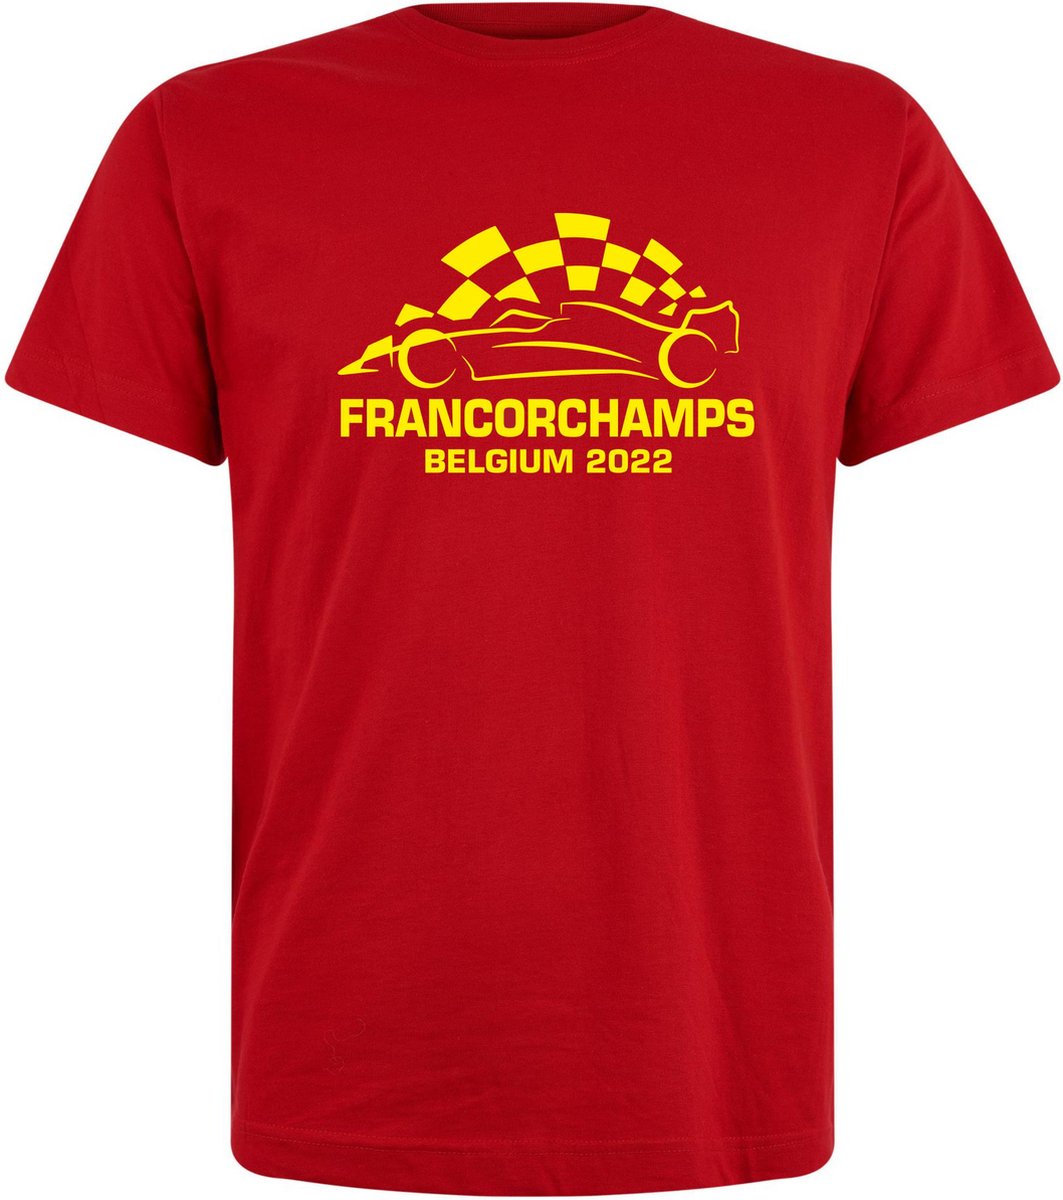 T-shirt Francorchamps Belgium 2022 met raceauto | Max Verstappen / Red Bull Racing / Formule 1 fan | Grand Prix Circuit Spa-Francorchamps | kleding shirt | Rood | maat S